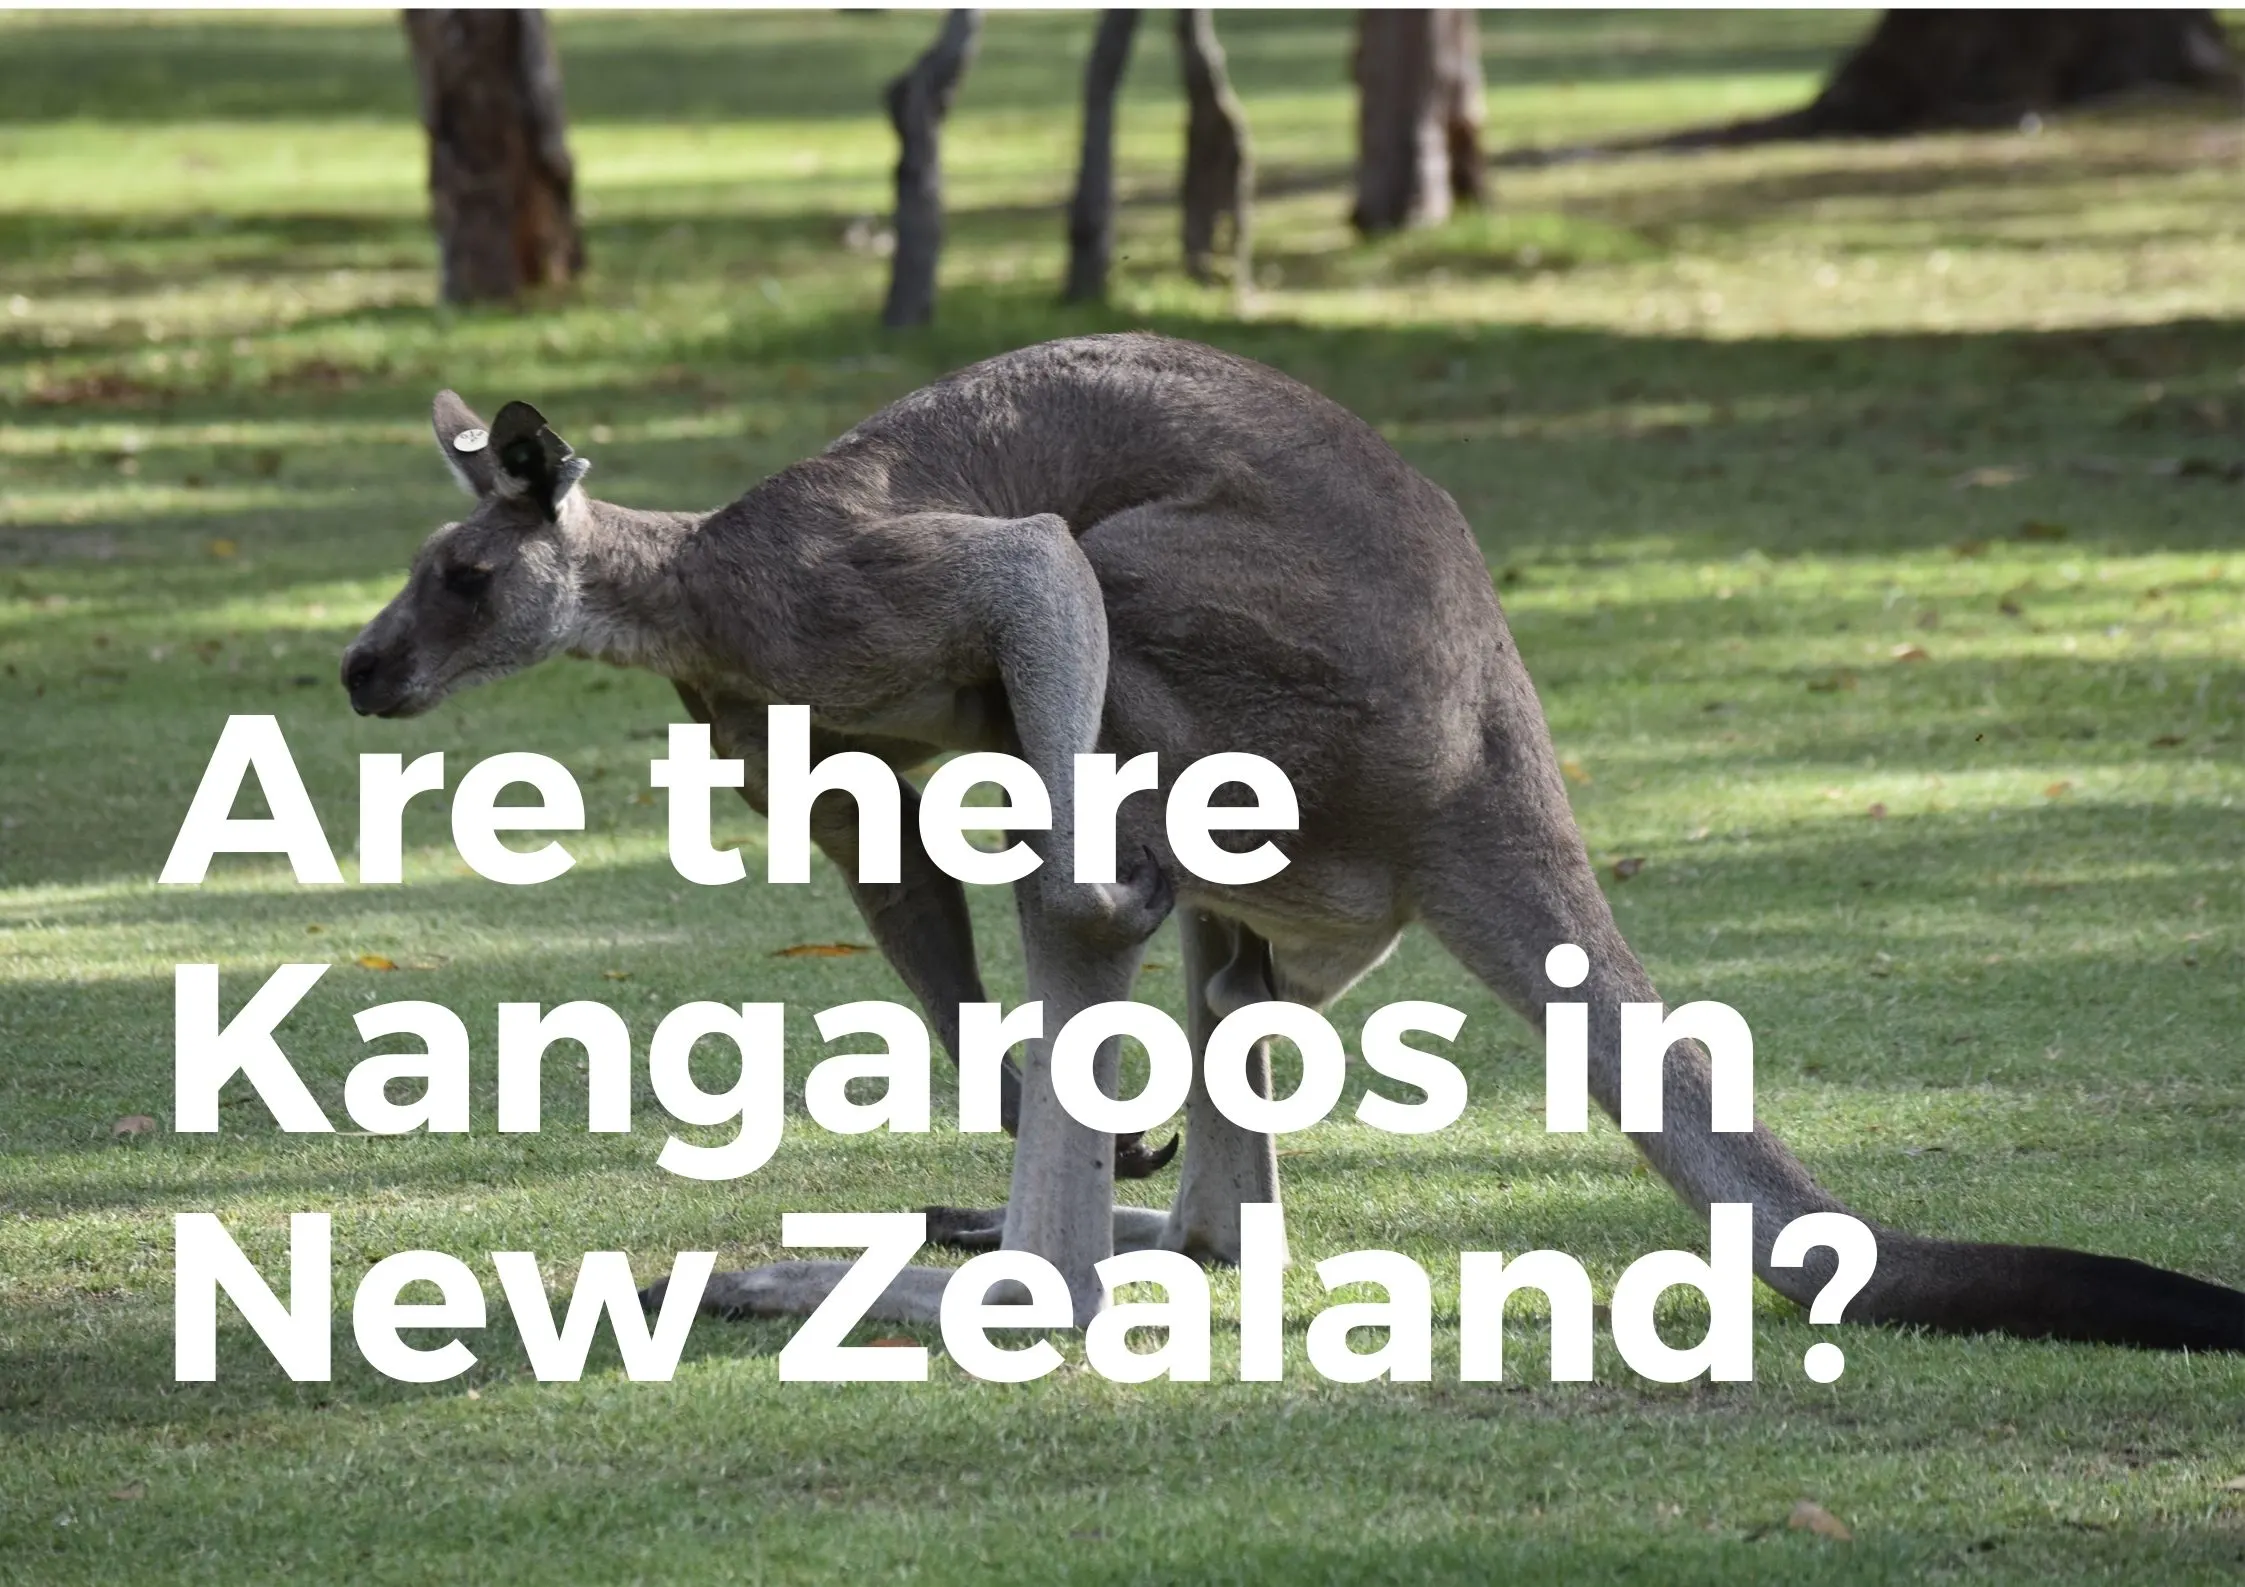 Does New Zealand have Kangaroos?